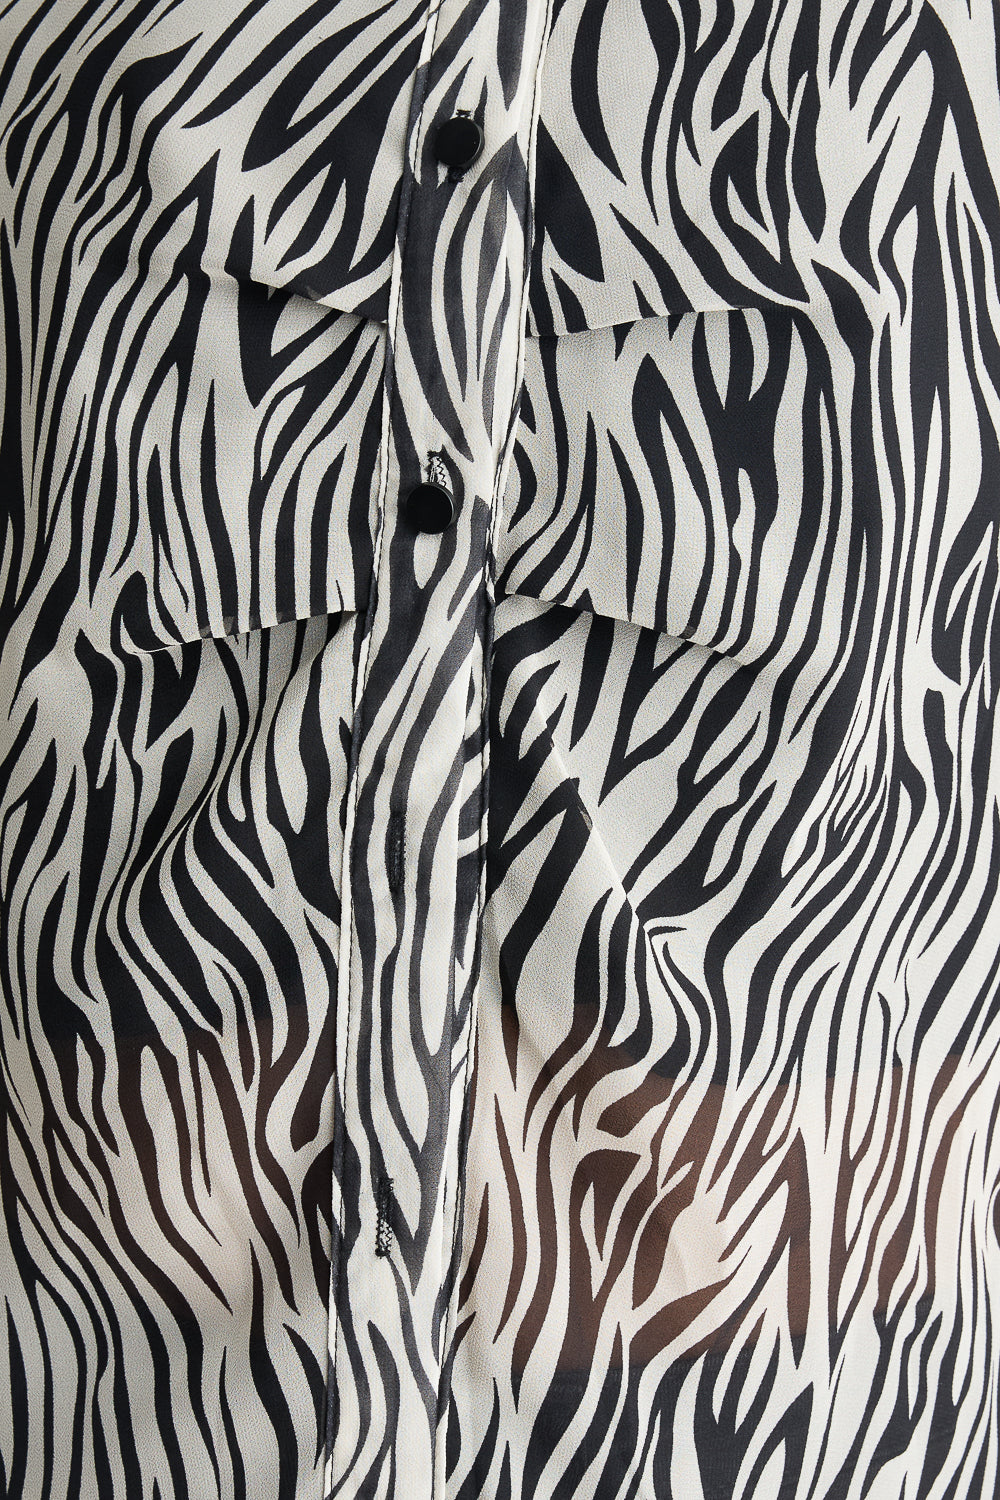 Zebra Printed Sheer Shirt